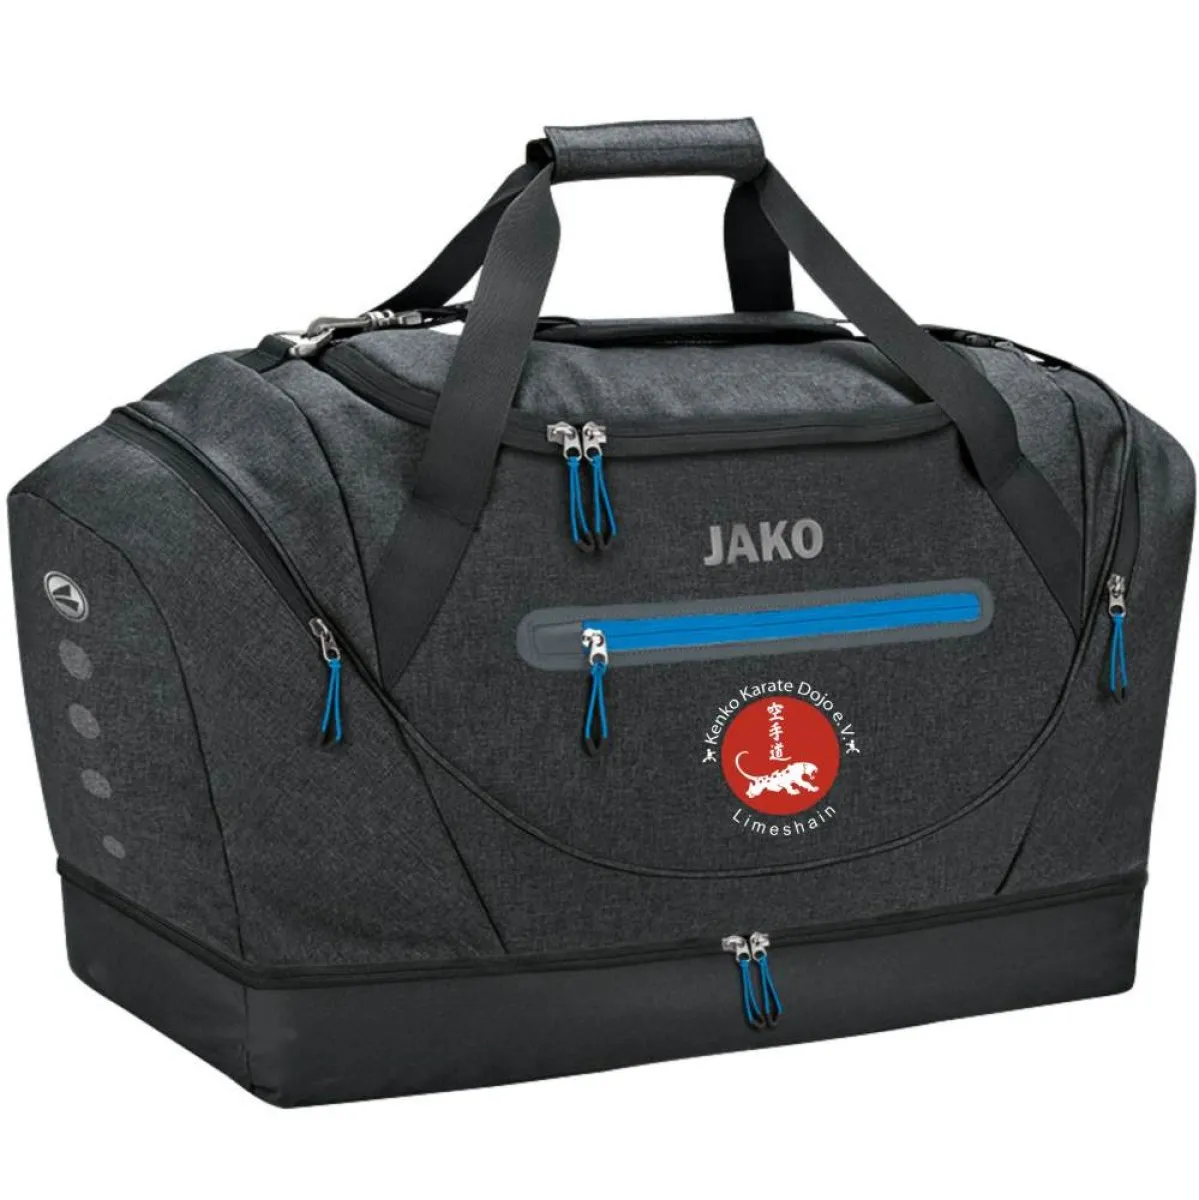 Sports bag CHAMP with bottom compartment Karate Kenko Limeshain